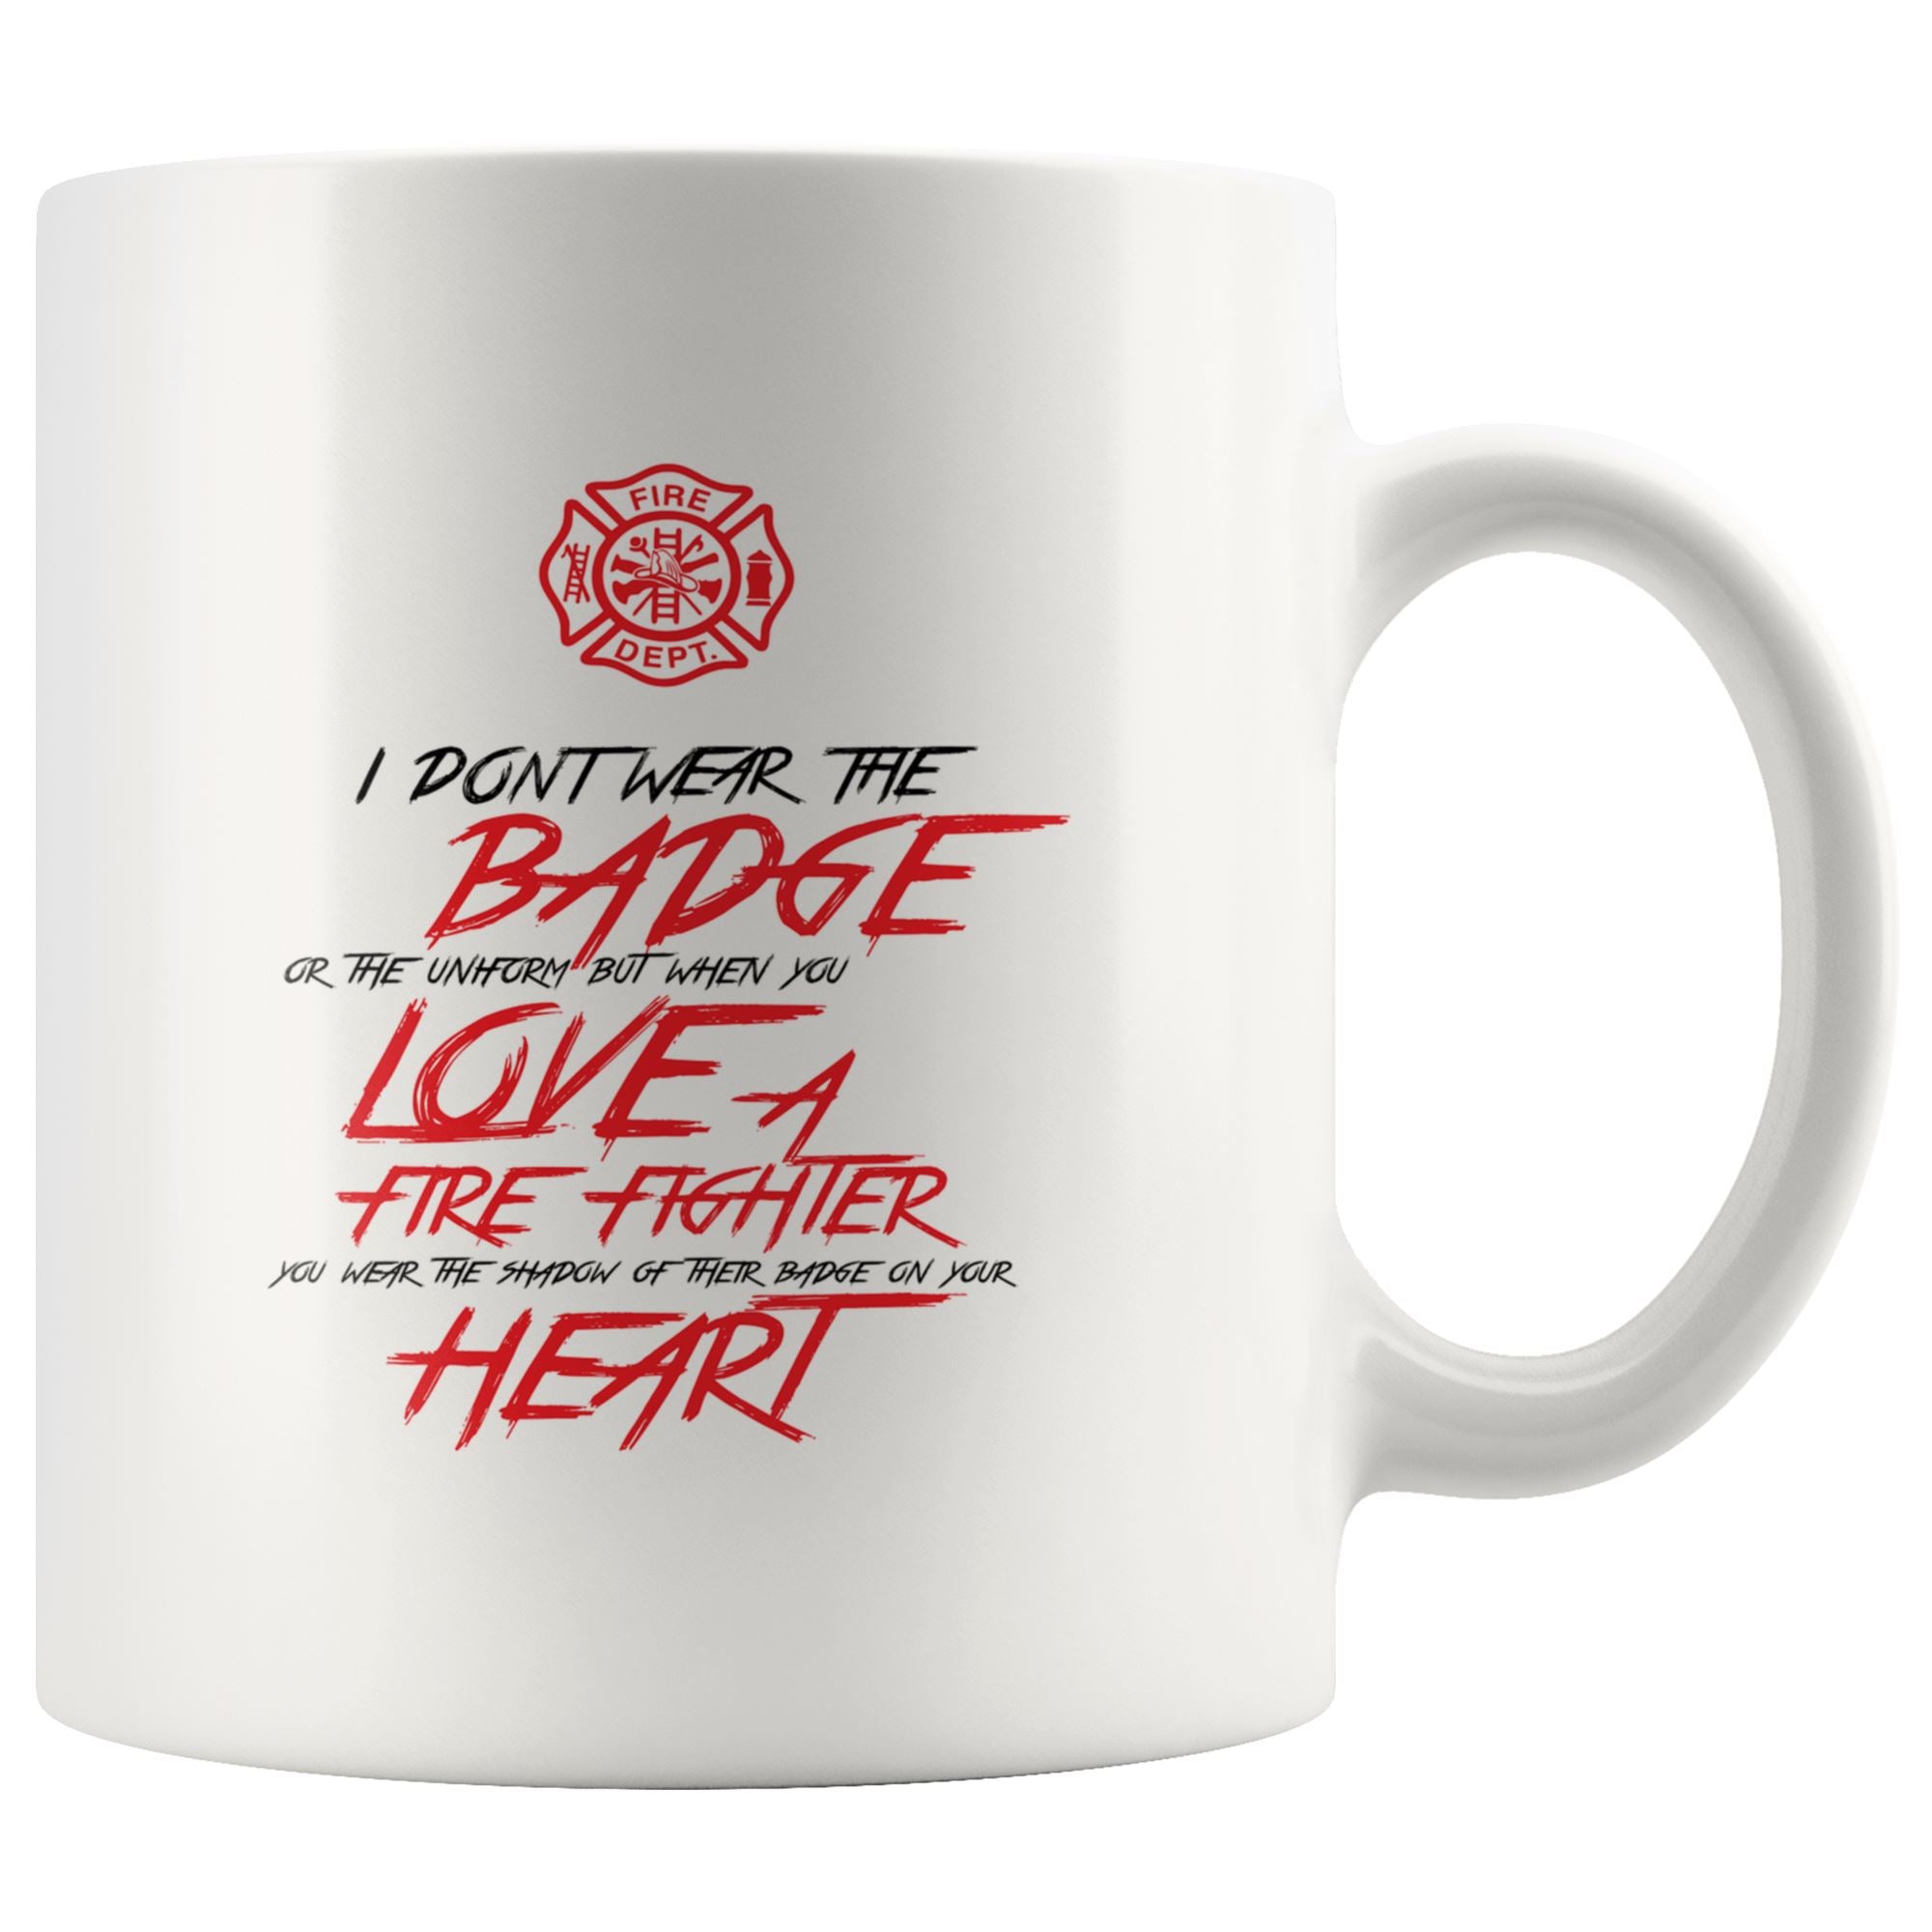 Love a Firefighter Drinkware teelaunch 11oz Mug 